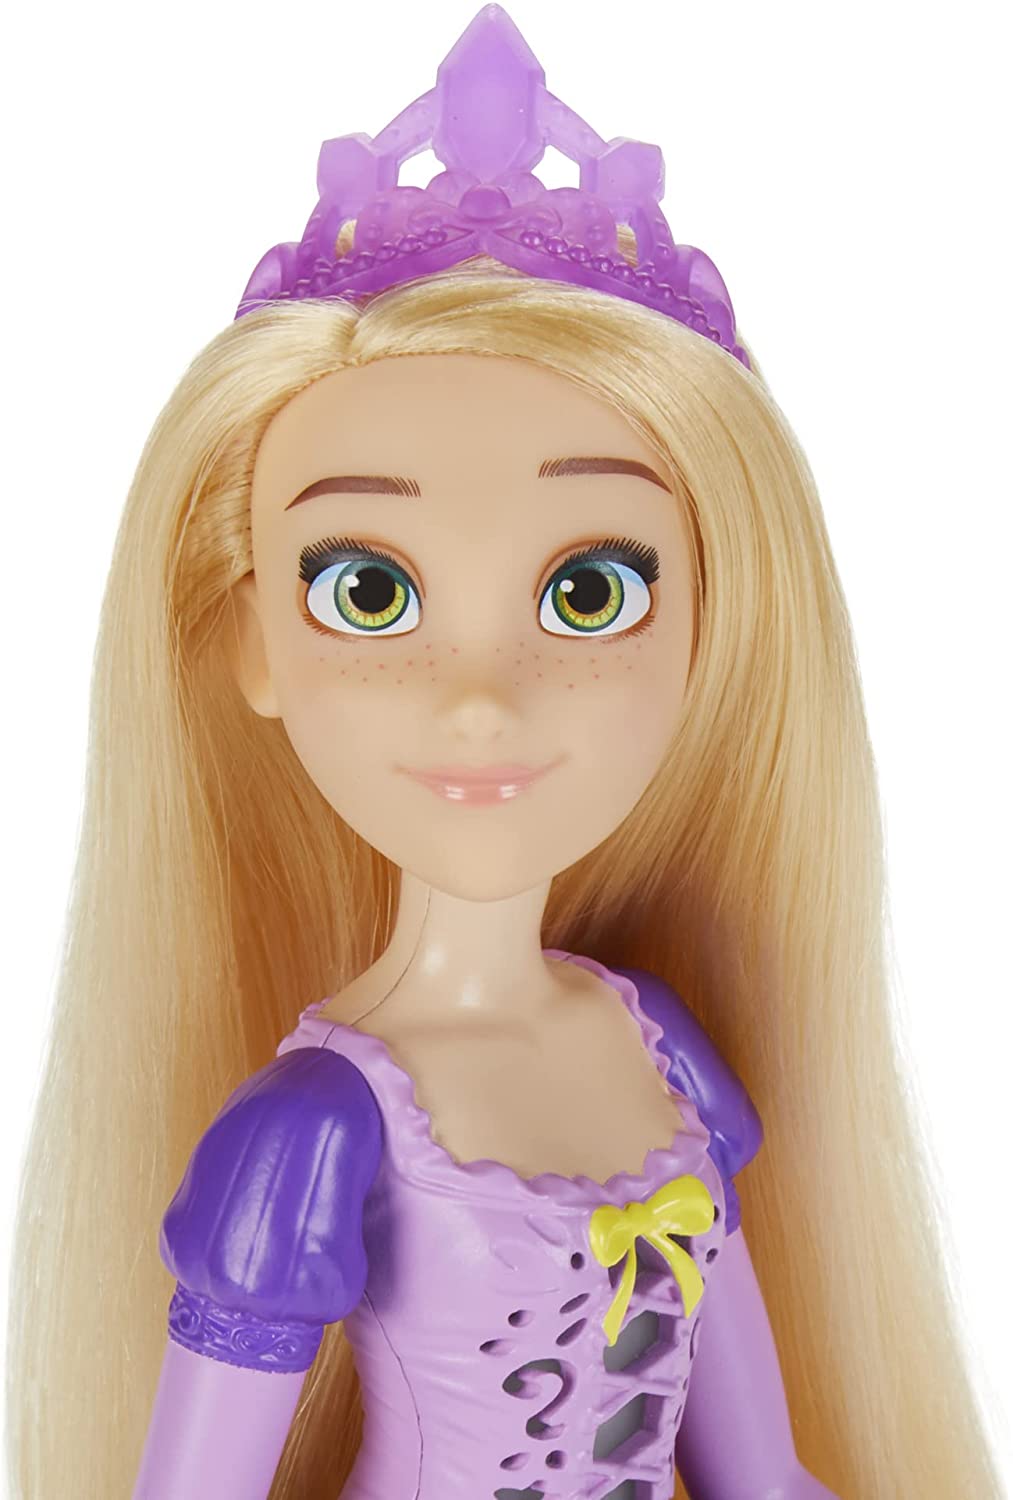 Disney Princess Singing Rapunzel Fashion Doll, Sings Song from Disney's Tangled